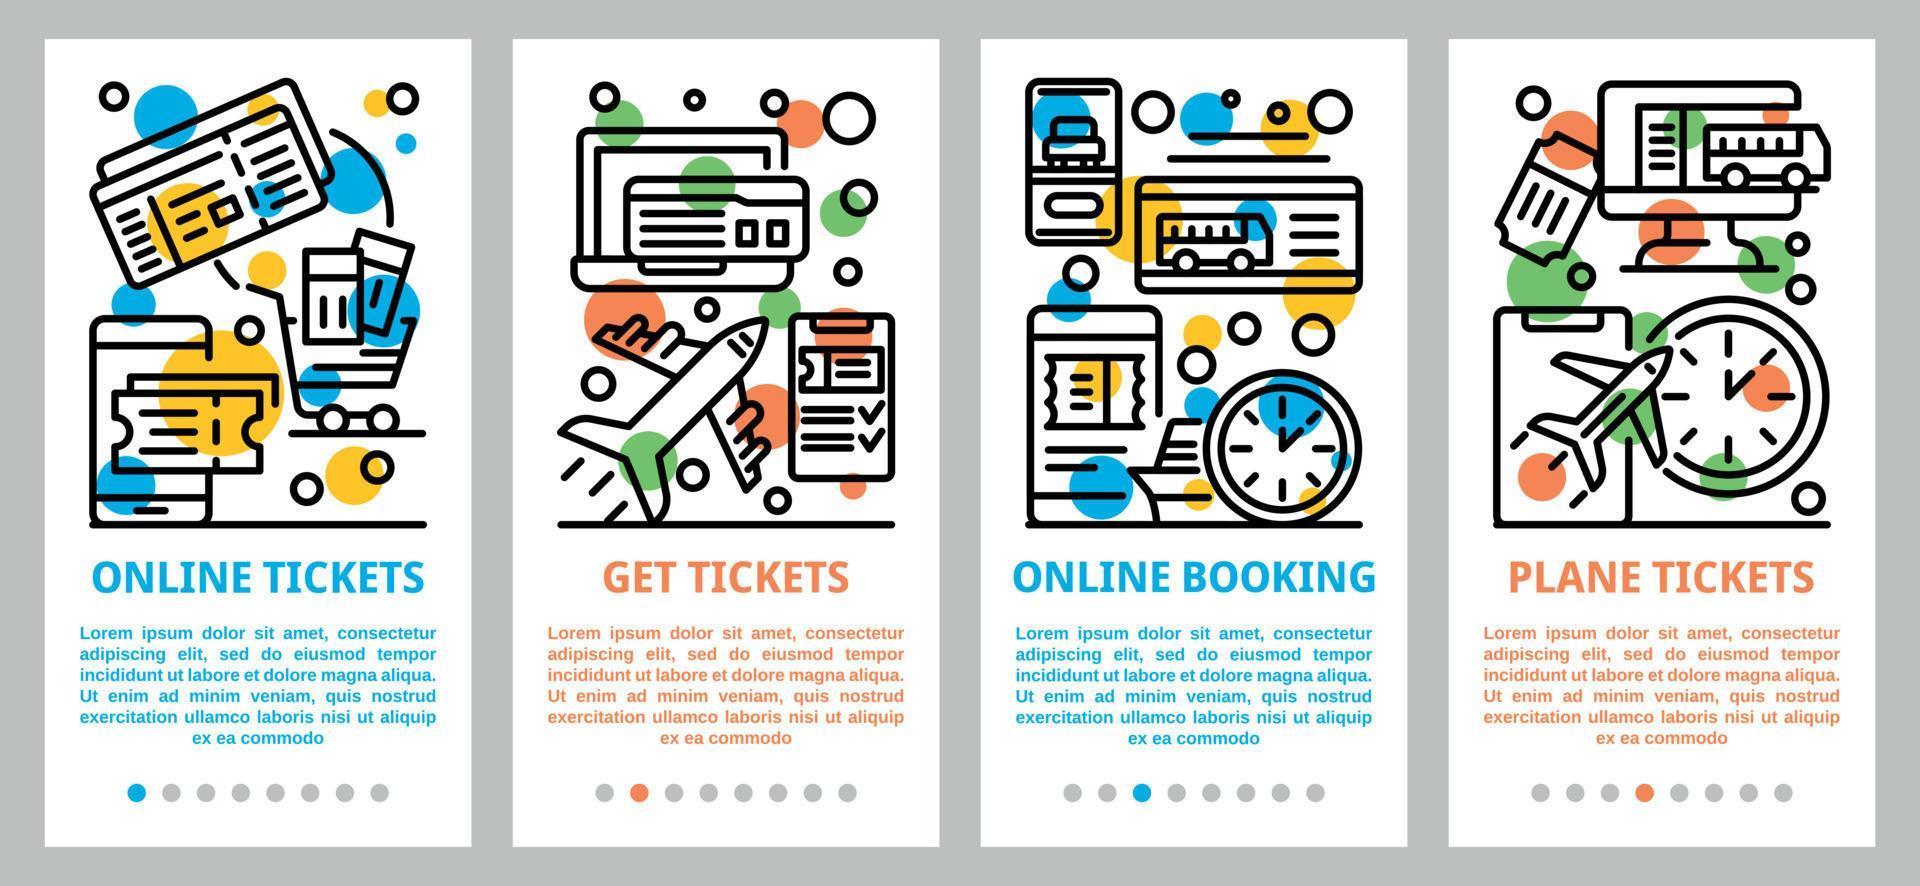 conjunto de banners de reserva de boletos en línea, estilo de esquema vector